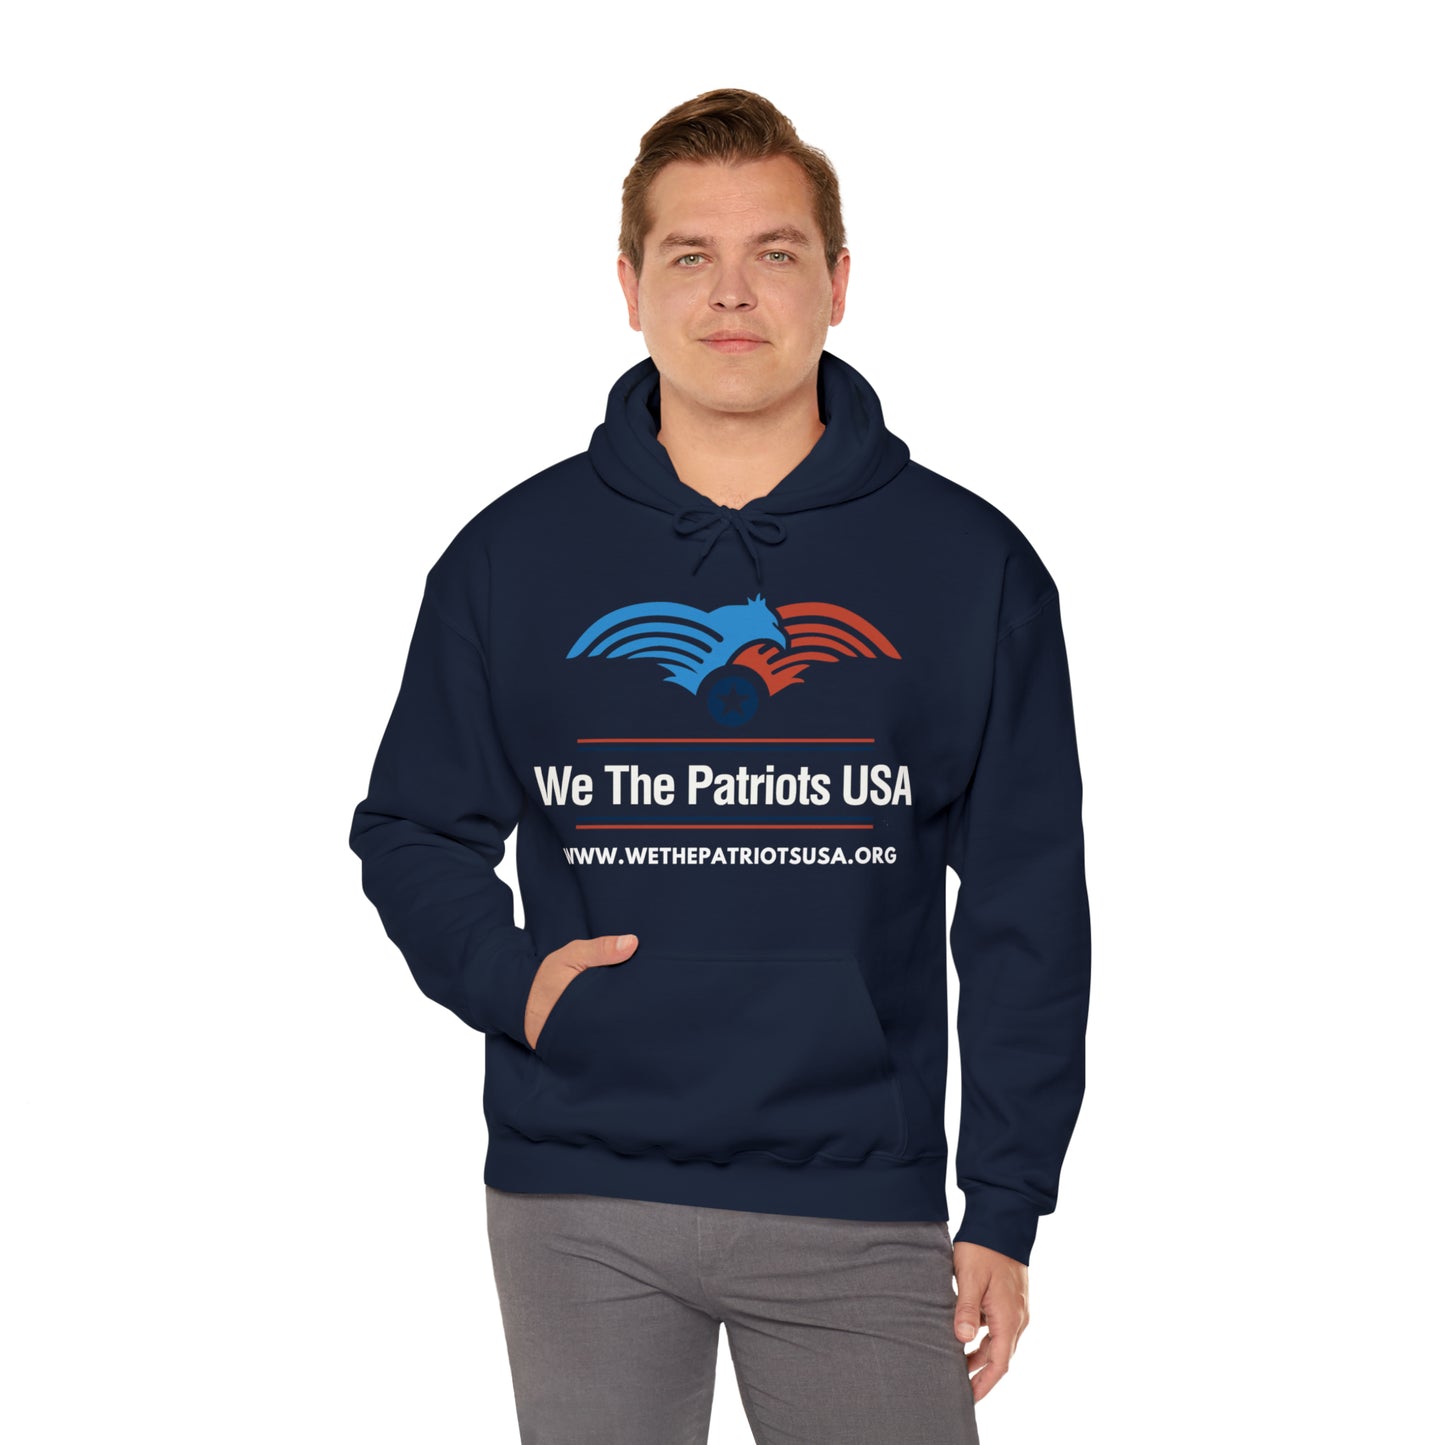 Patriots Unite Hooded Sweatshirt